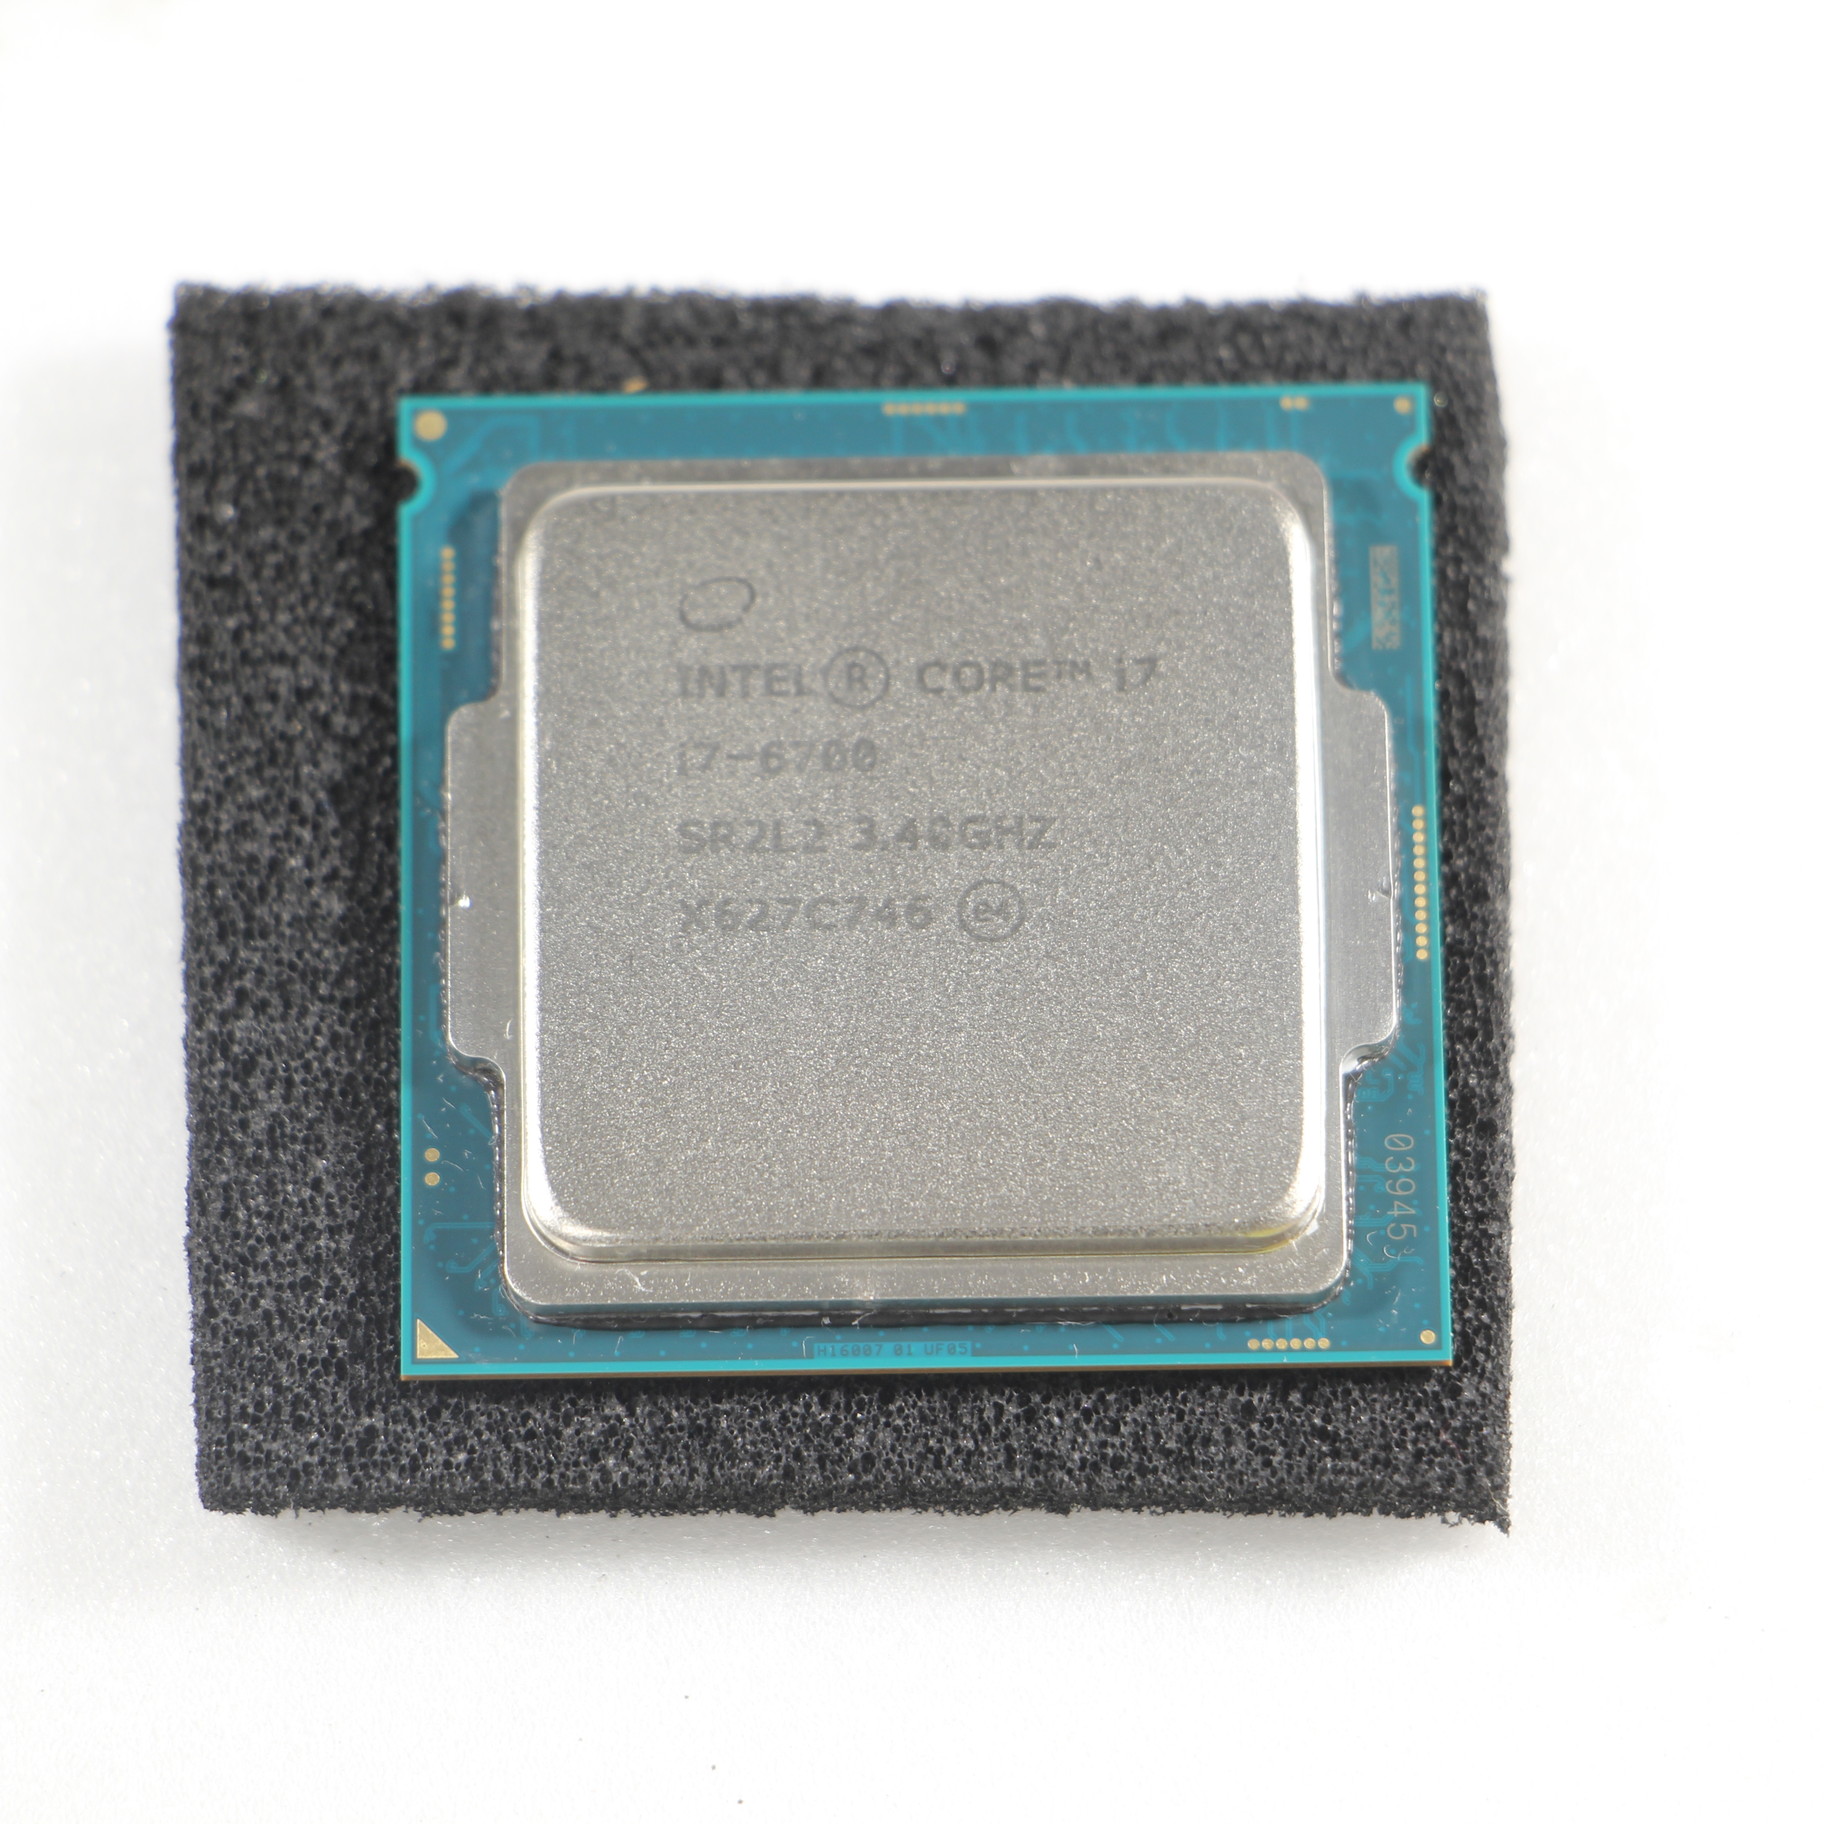 Intel Core i7 6700 3.4GHz